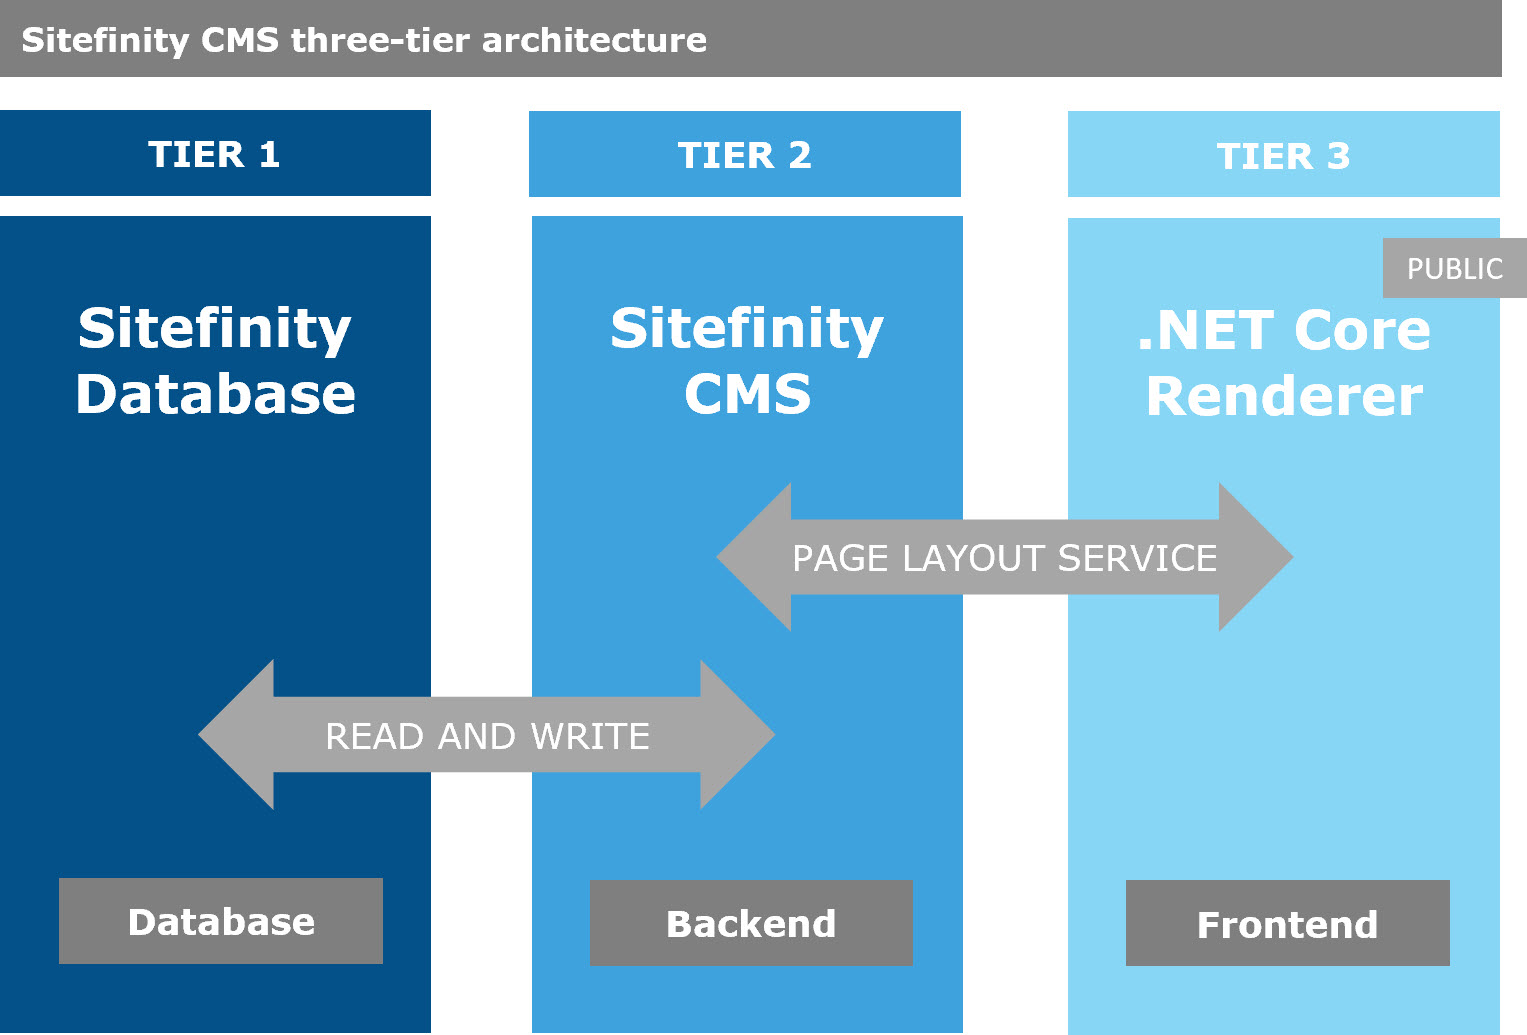 3-Tier Architecture: Security vs Software Development.